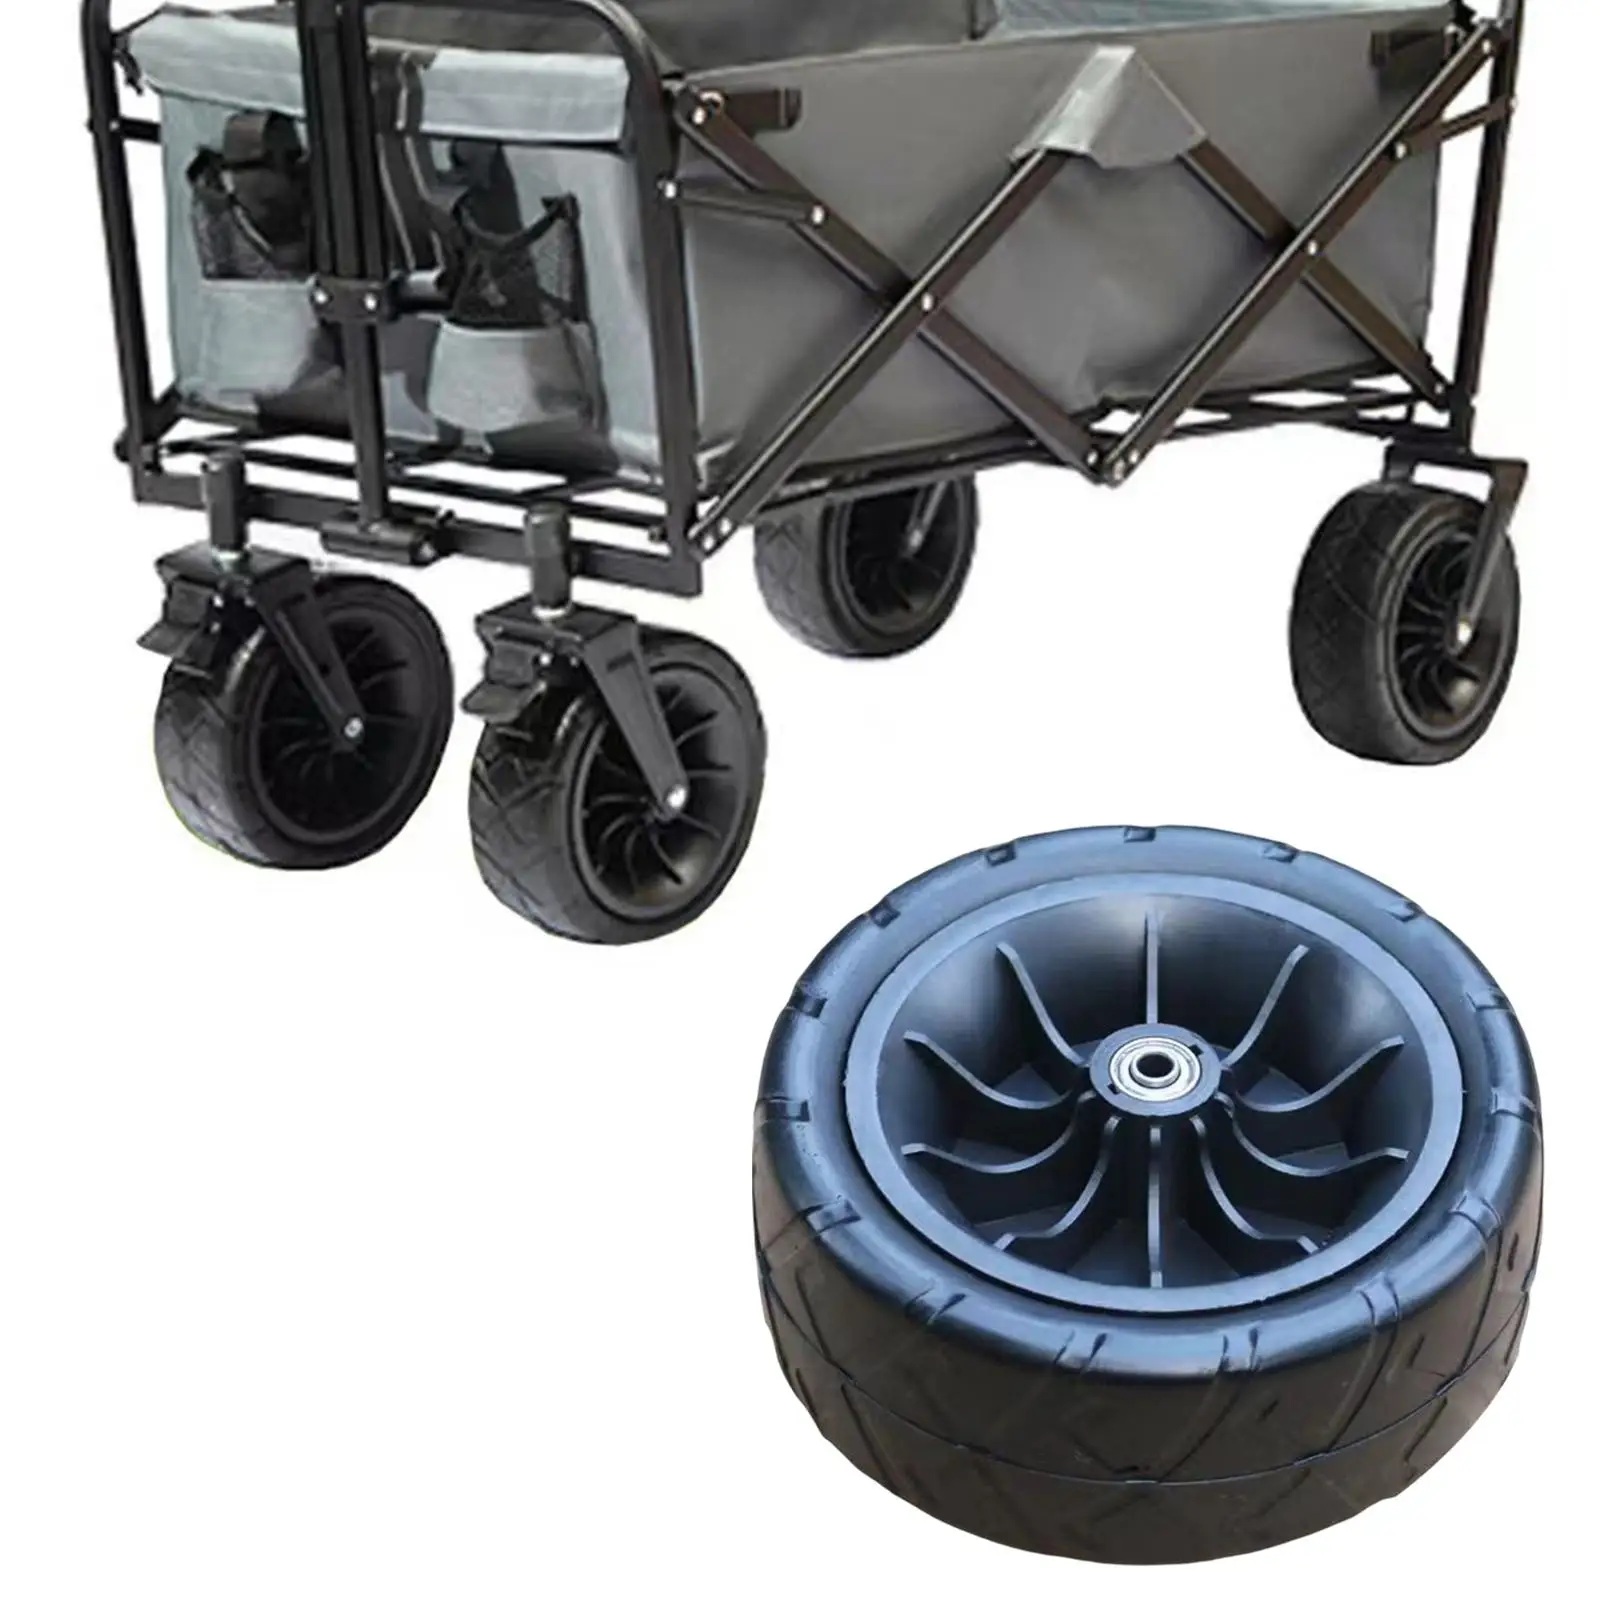 20cm Replacement Wheel for Wagon Garden Cart Shopping Trolley Attachment